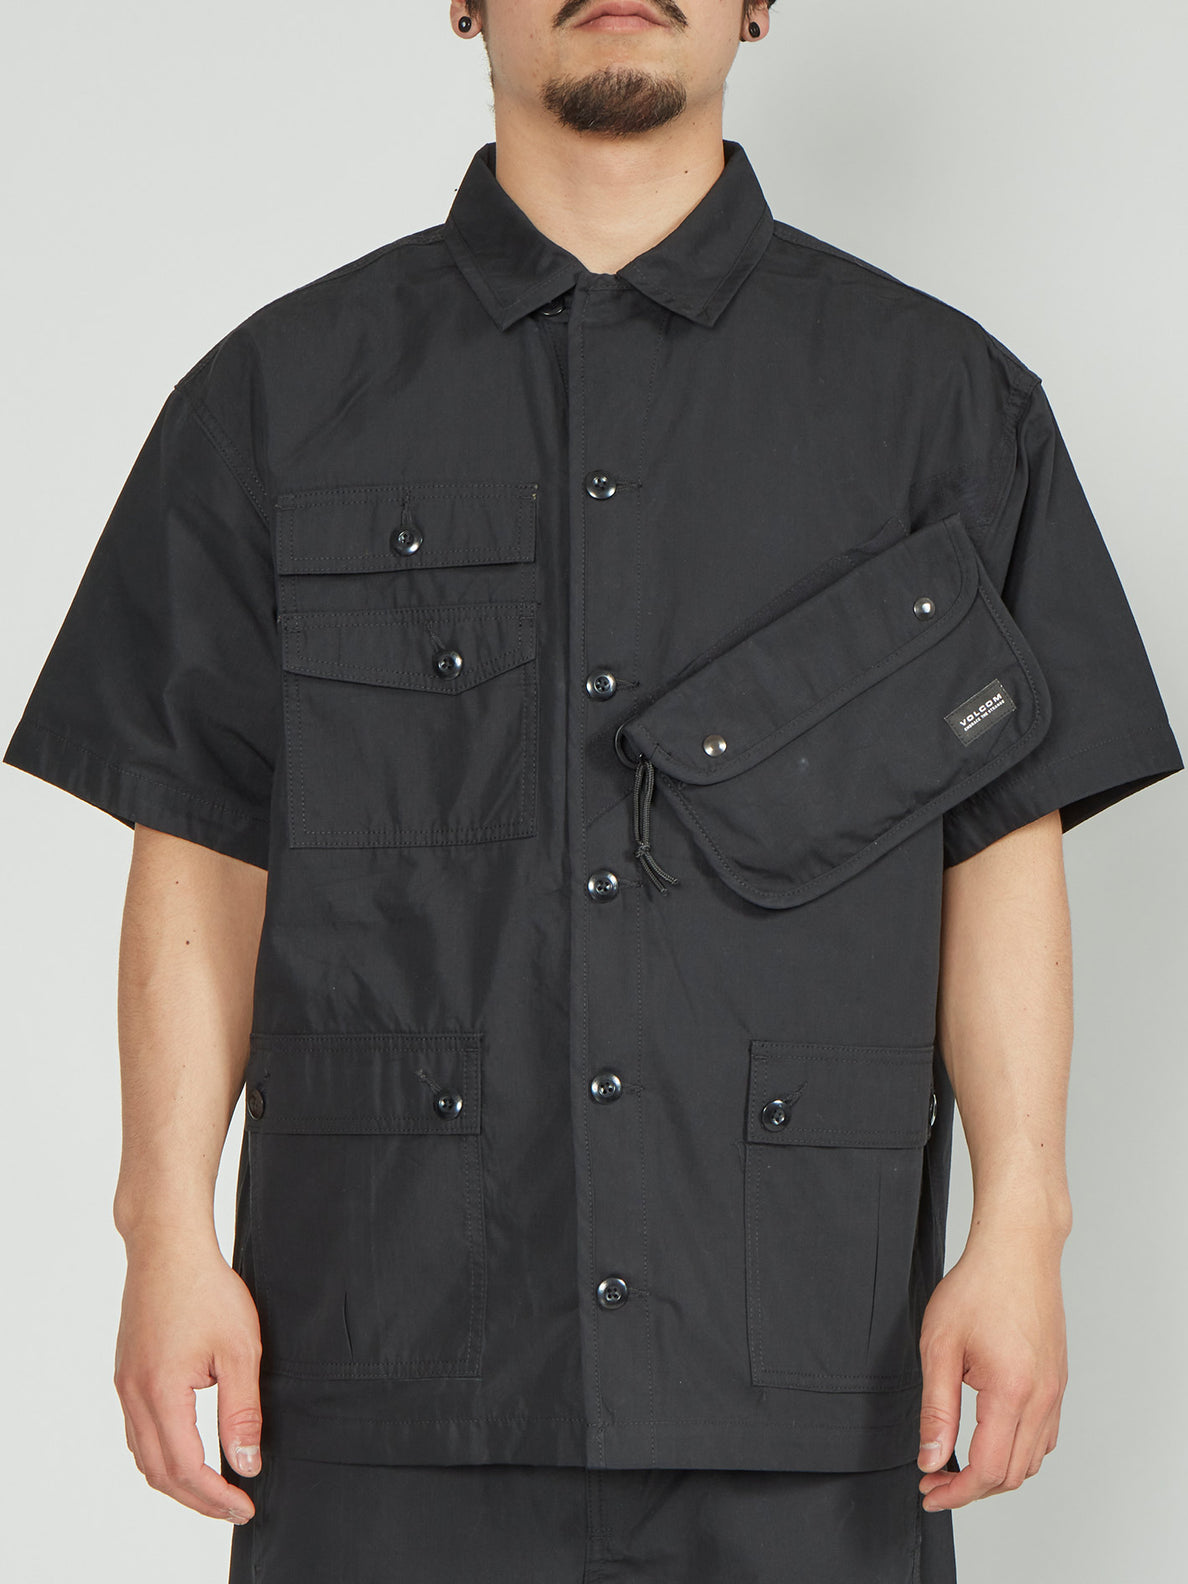 Jp V Mil Shirt Black (A0402100_BLK) [F]